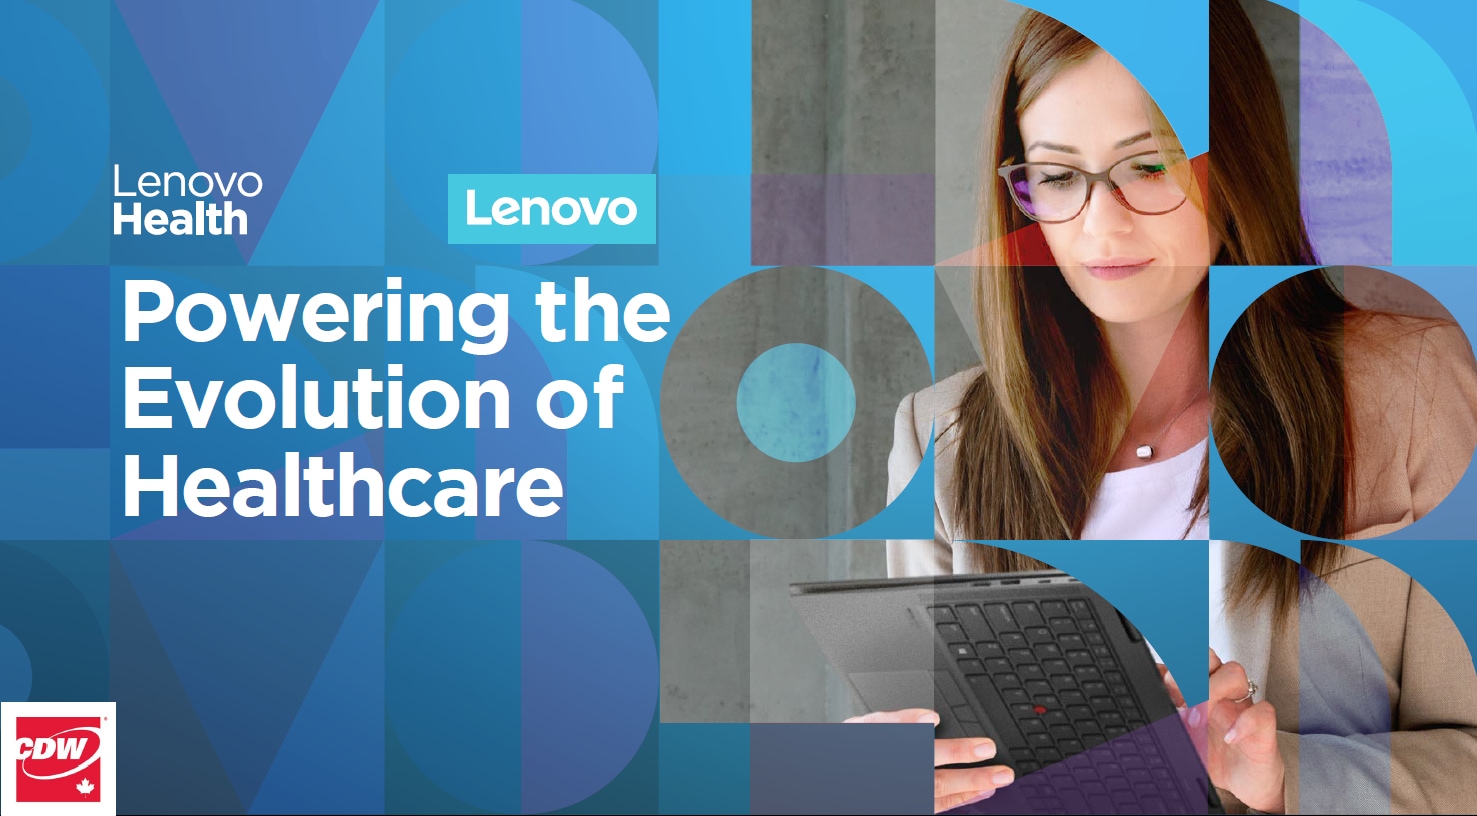 Image of Lenovo Health banner